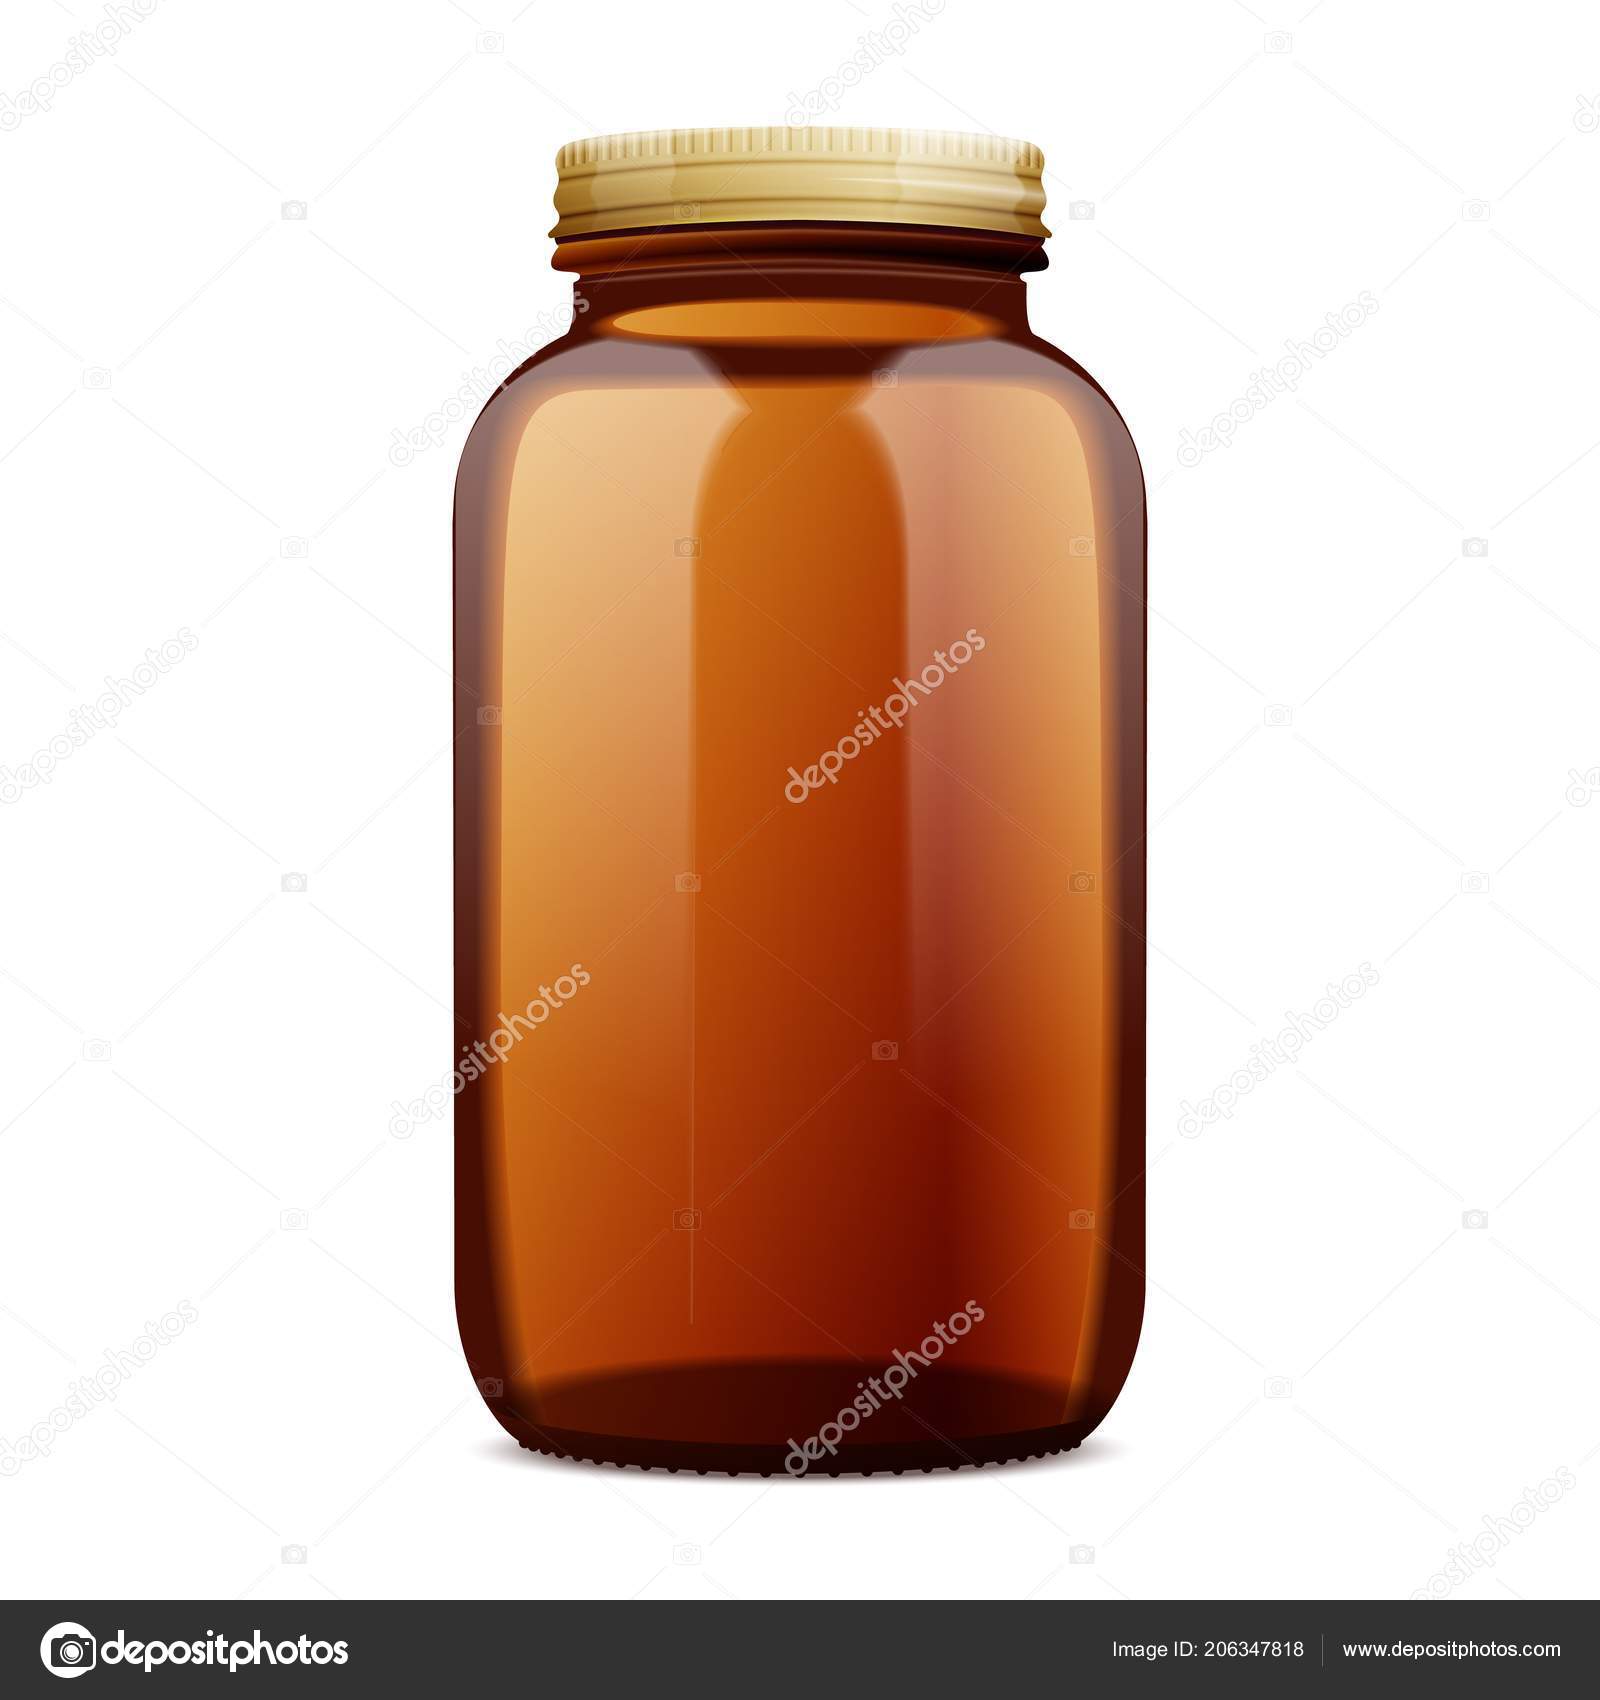 Download Dark Amber Glass Bottle Mockup Vector Image By C Netkoff Vector Stock 206347818